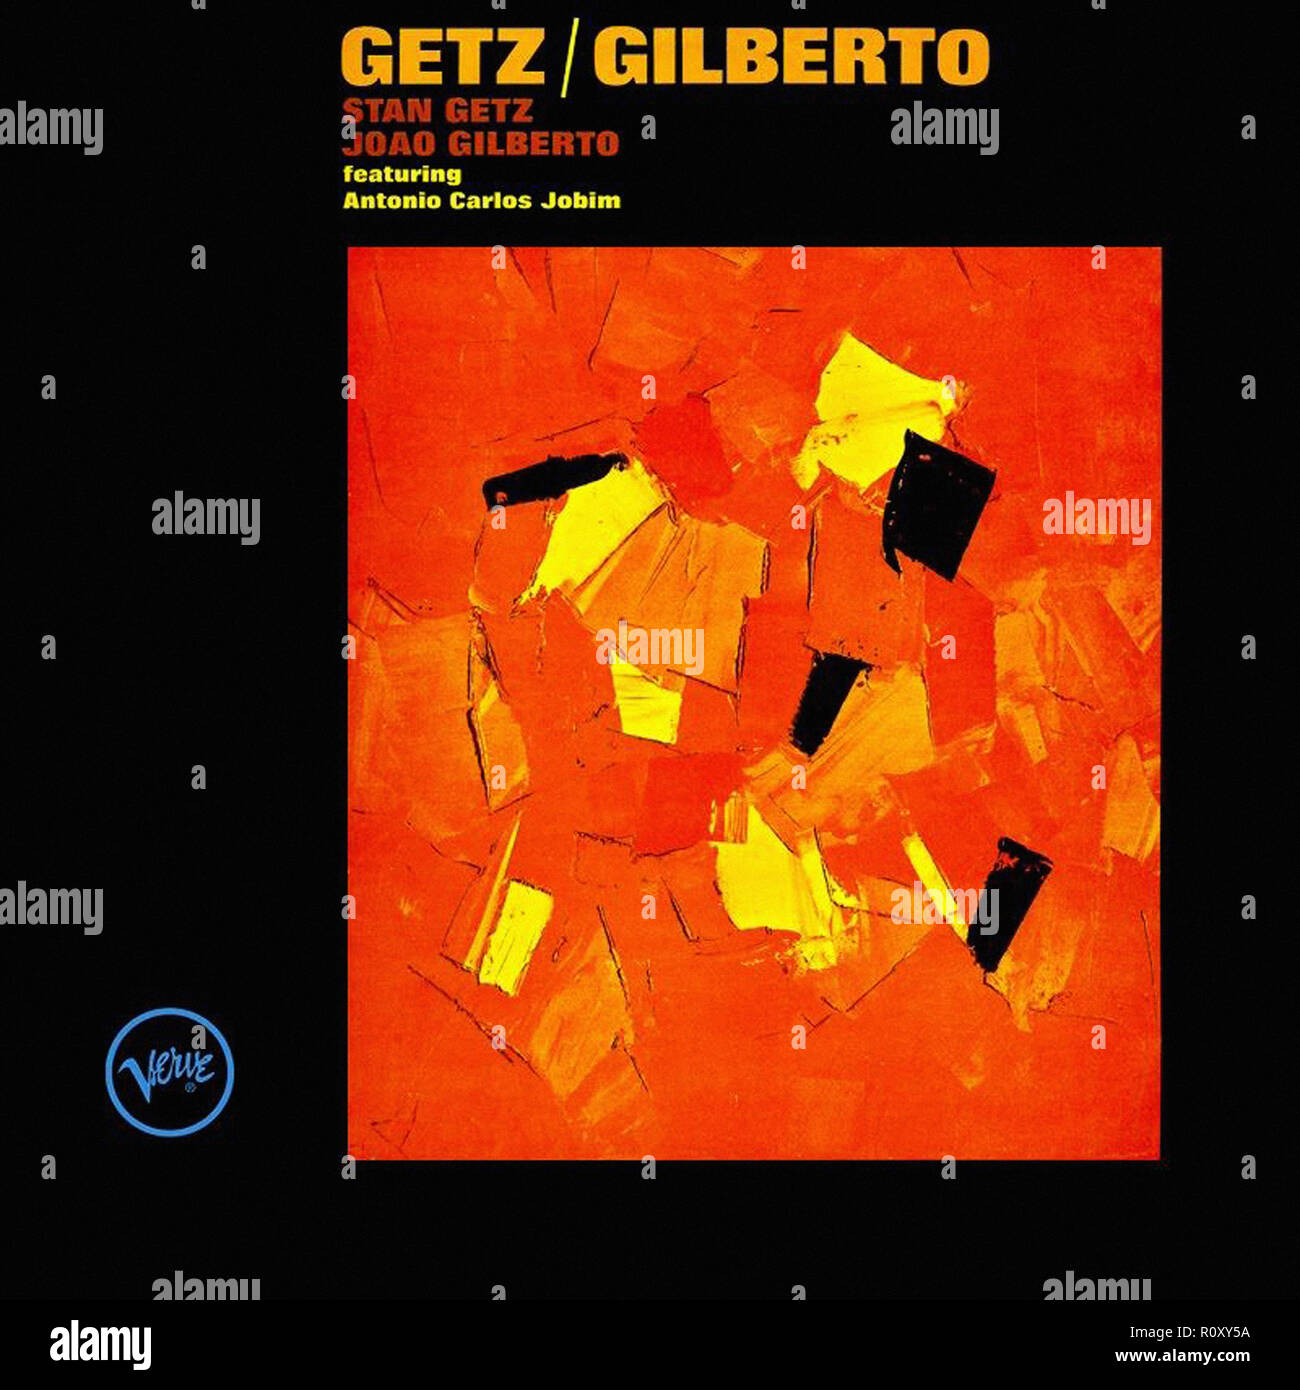 STAN GETZ - GILBERTO featuring Antonio Carlos Jobim - Vintage cover ...